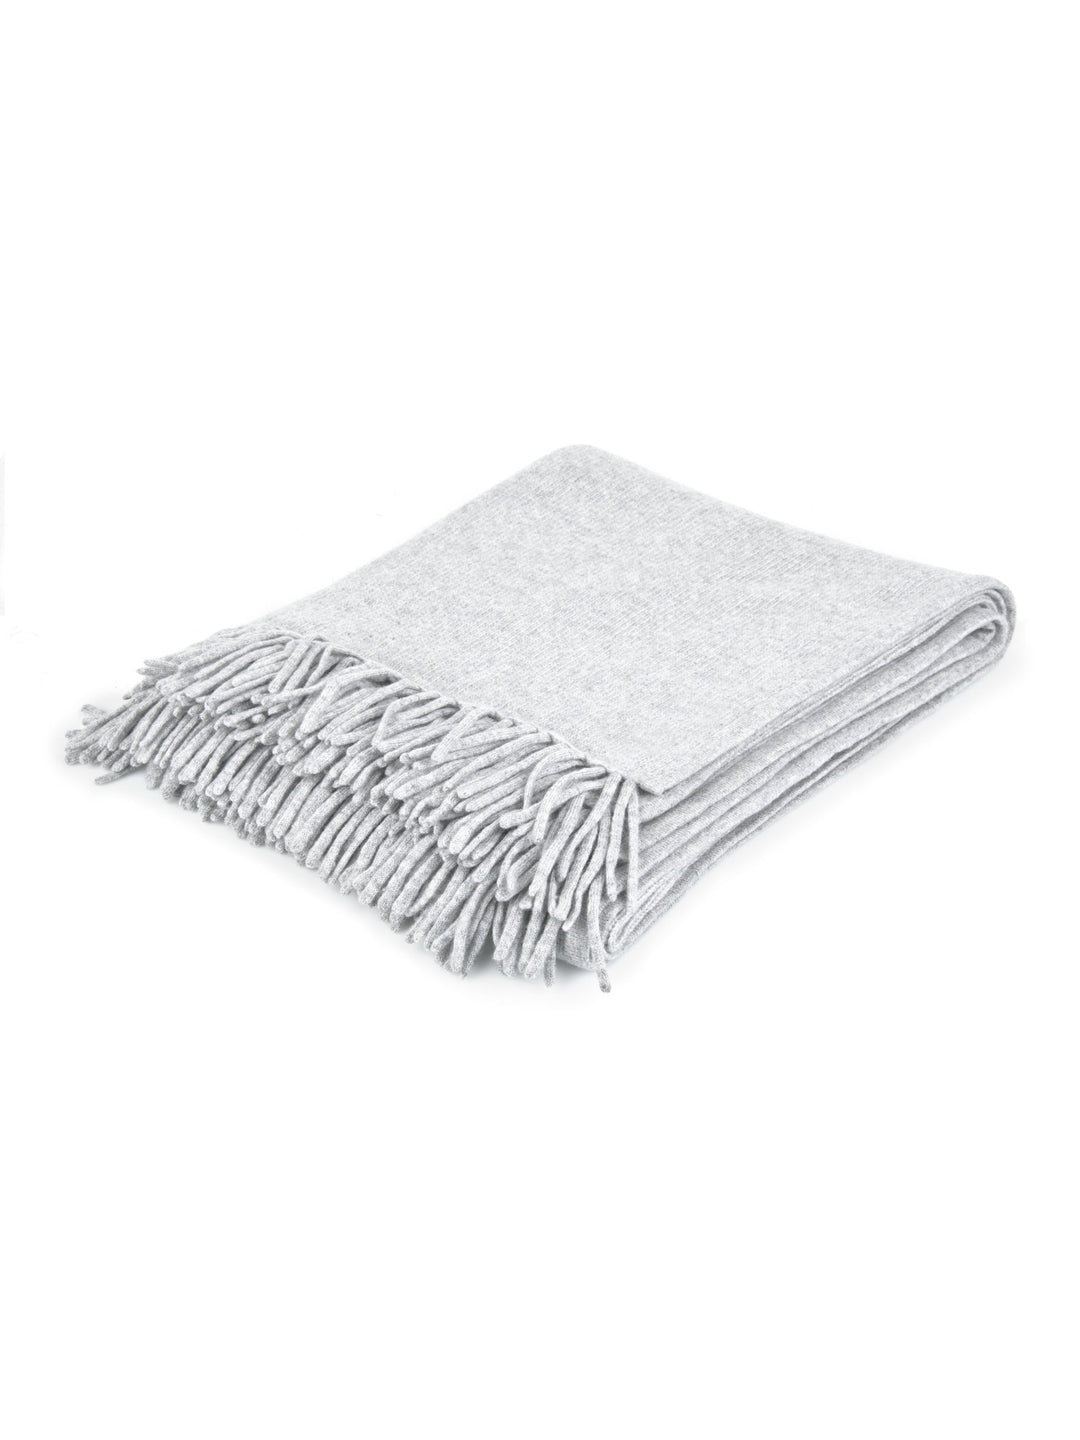 Cashmere blanket, 100% pure cashmere, natural, soft, warm, Kashmina